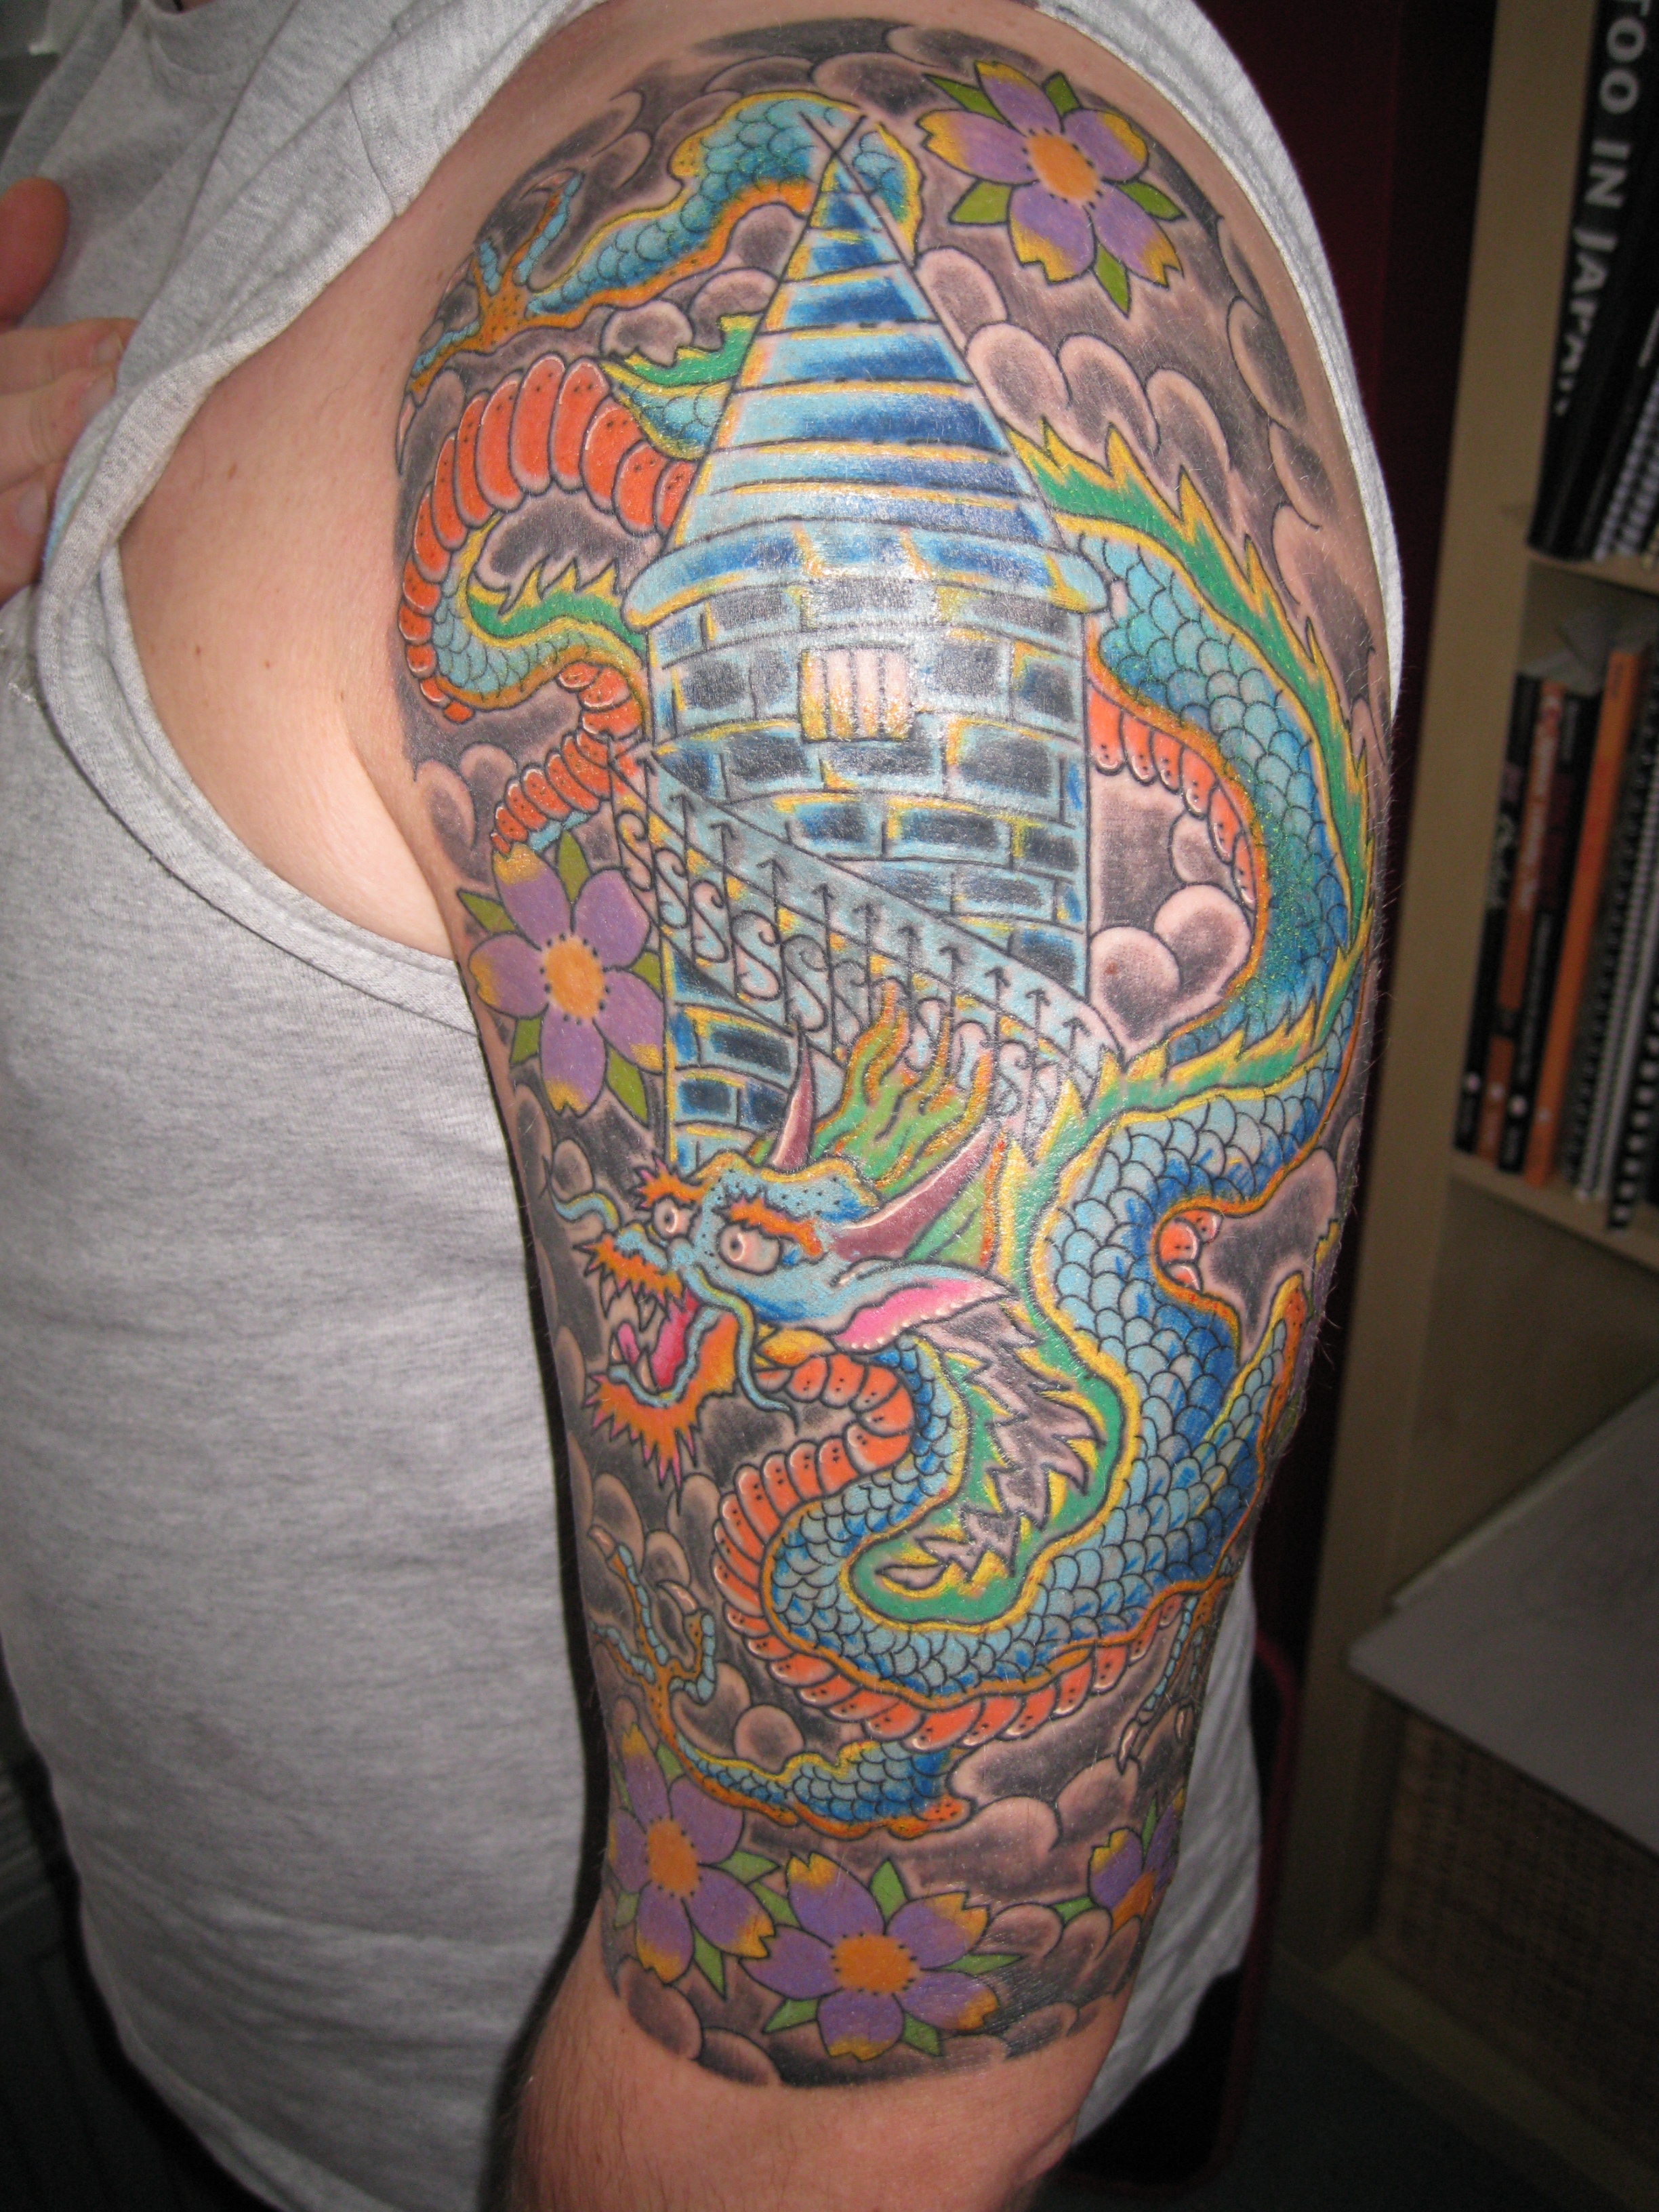 Everton Tower Tattoo